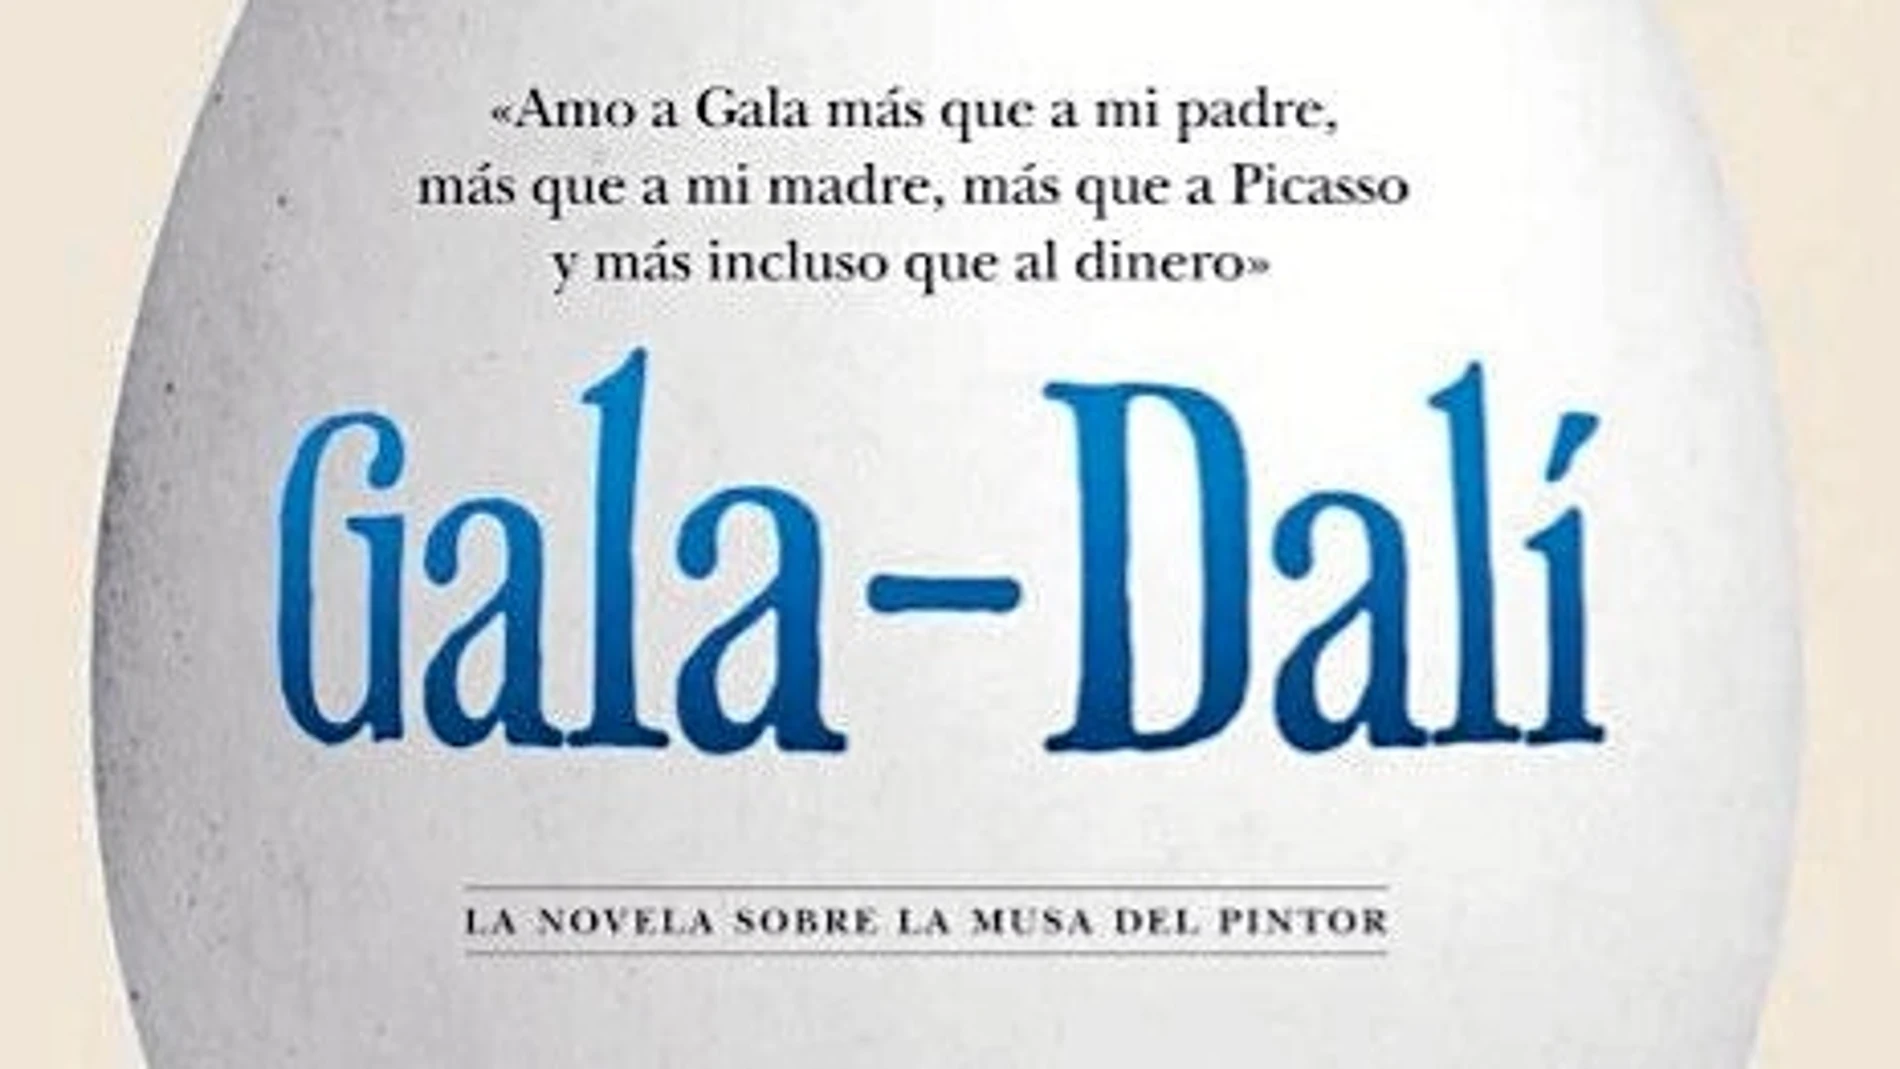 «Gala-Dalí» Carmen Domingo. ESPASA 358 páginas, 19,90 euros